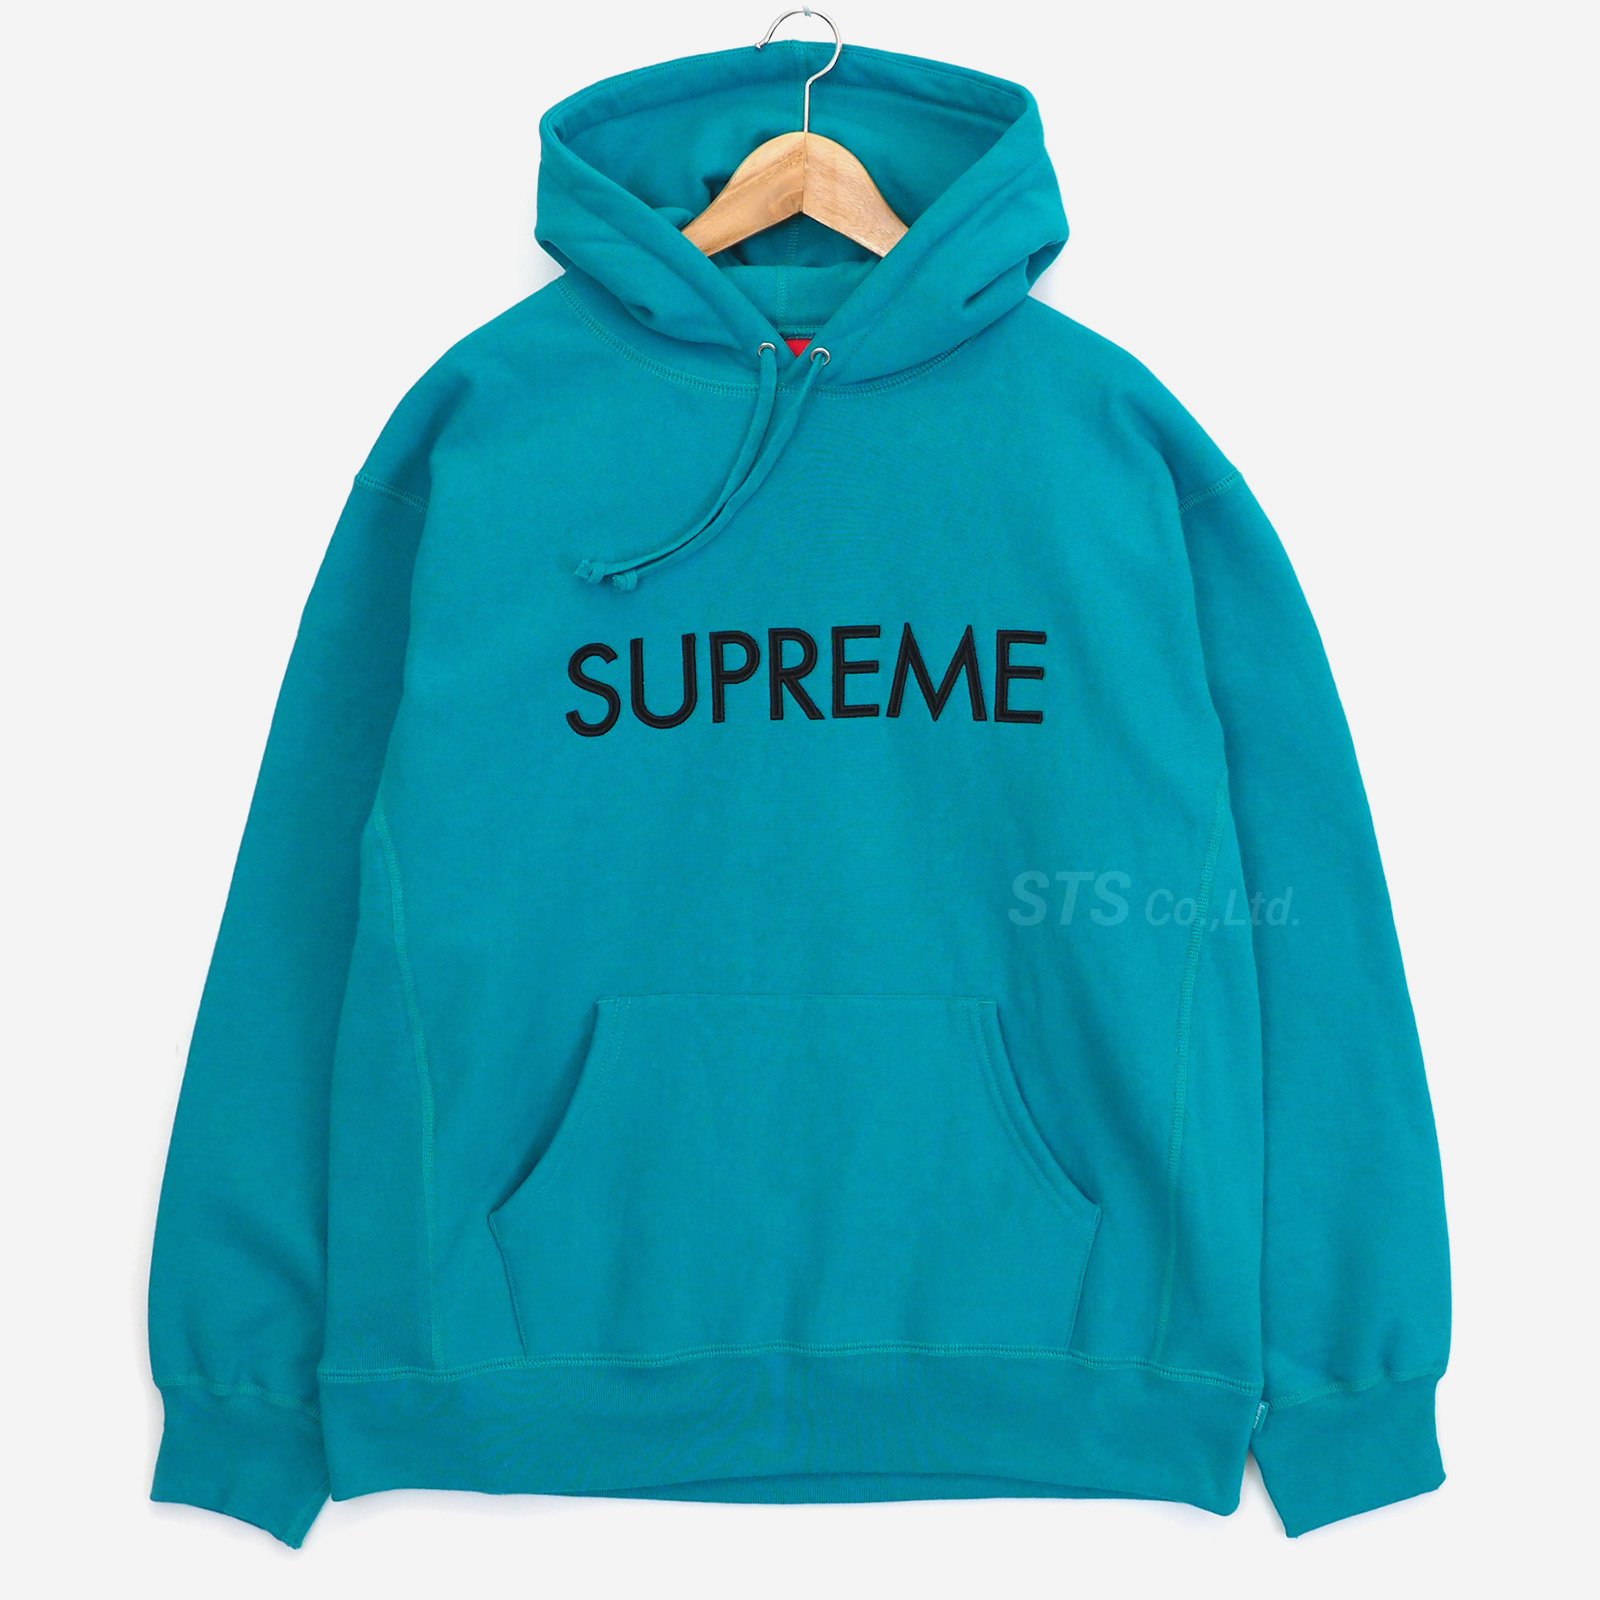 supremeSupreme Capital Hooded Sweatshirt XLサイズ